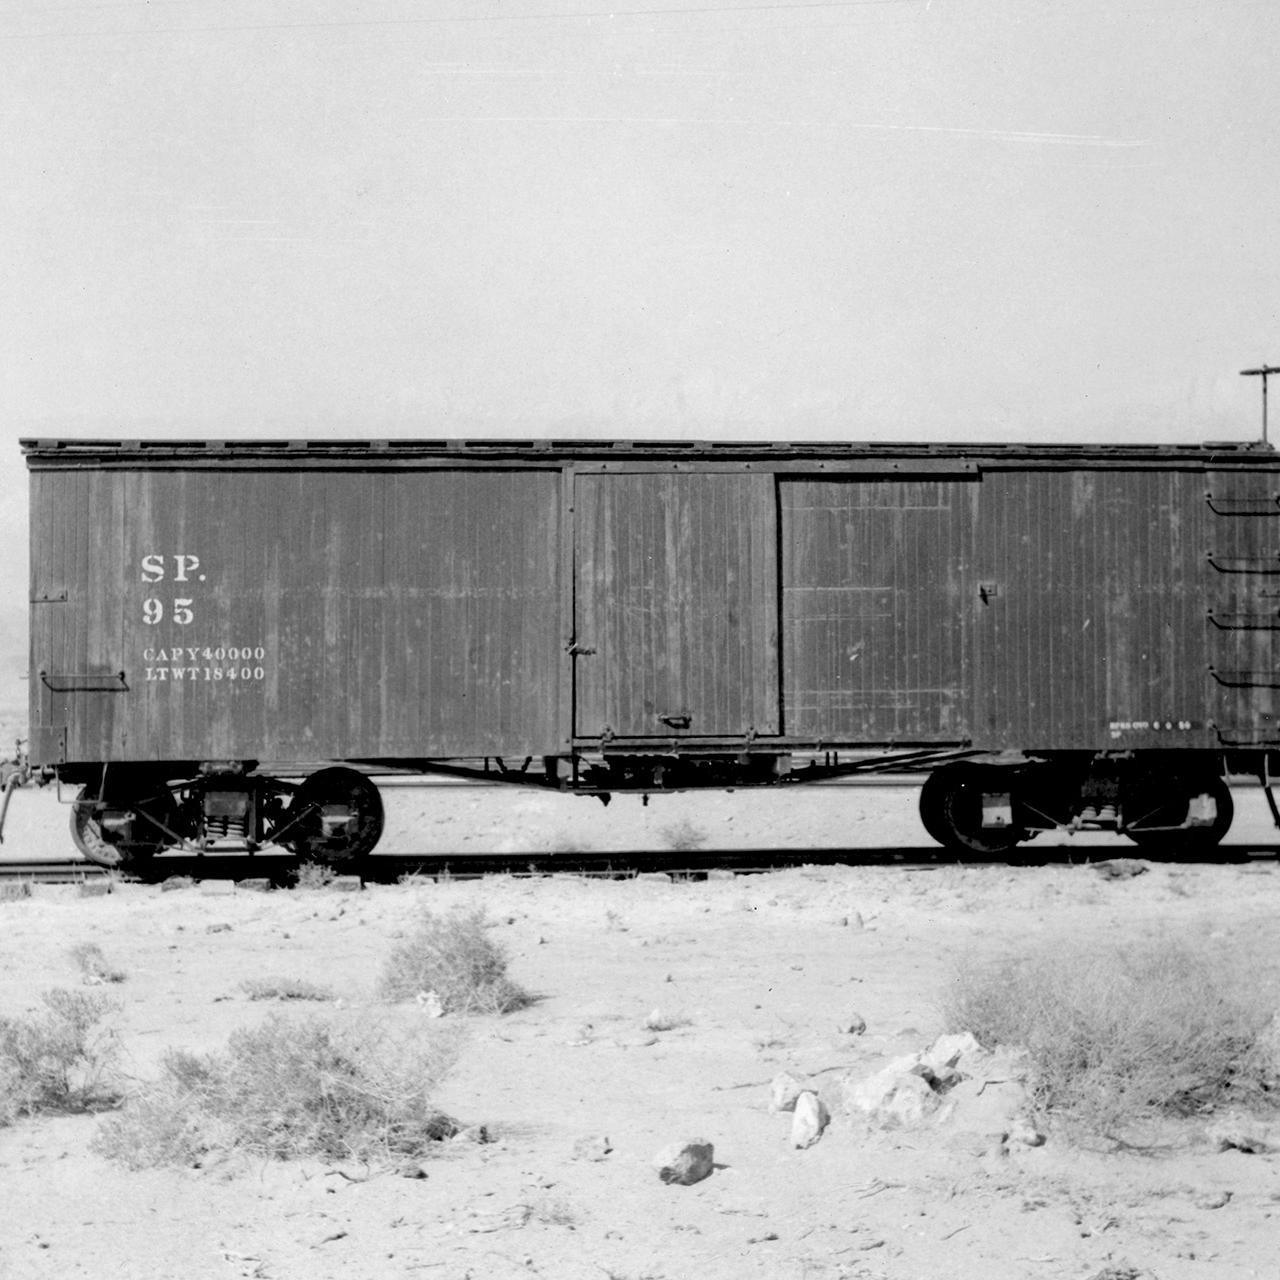 Boxcar #95 in 1957